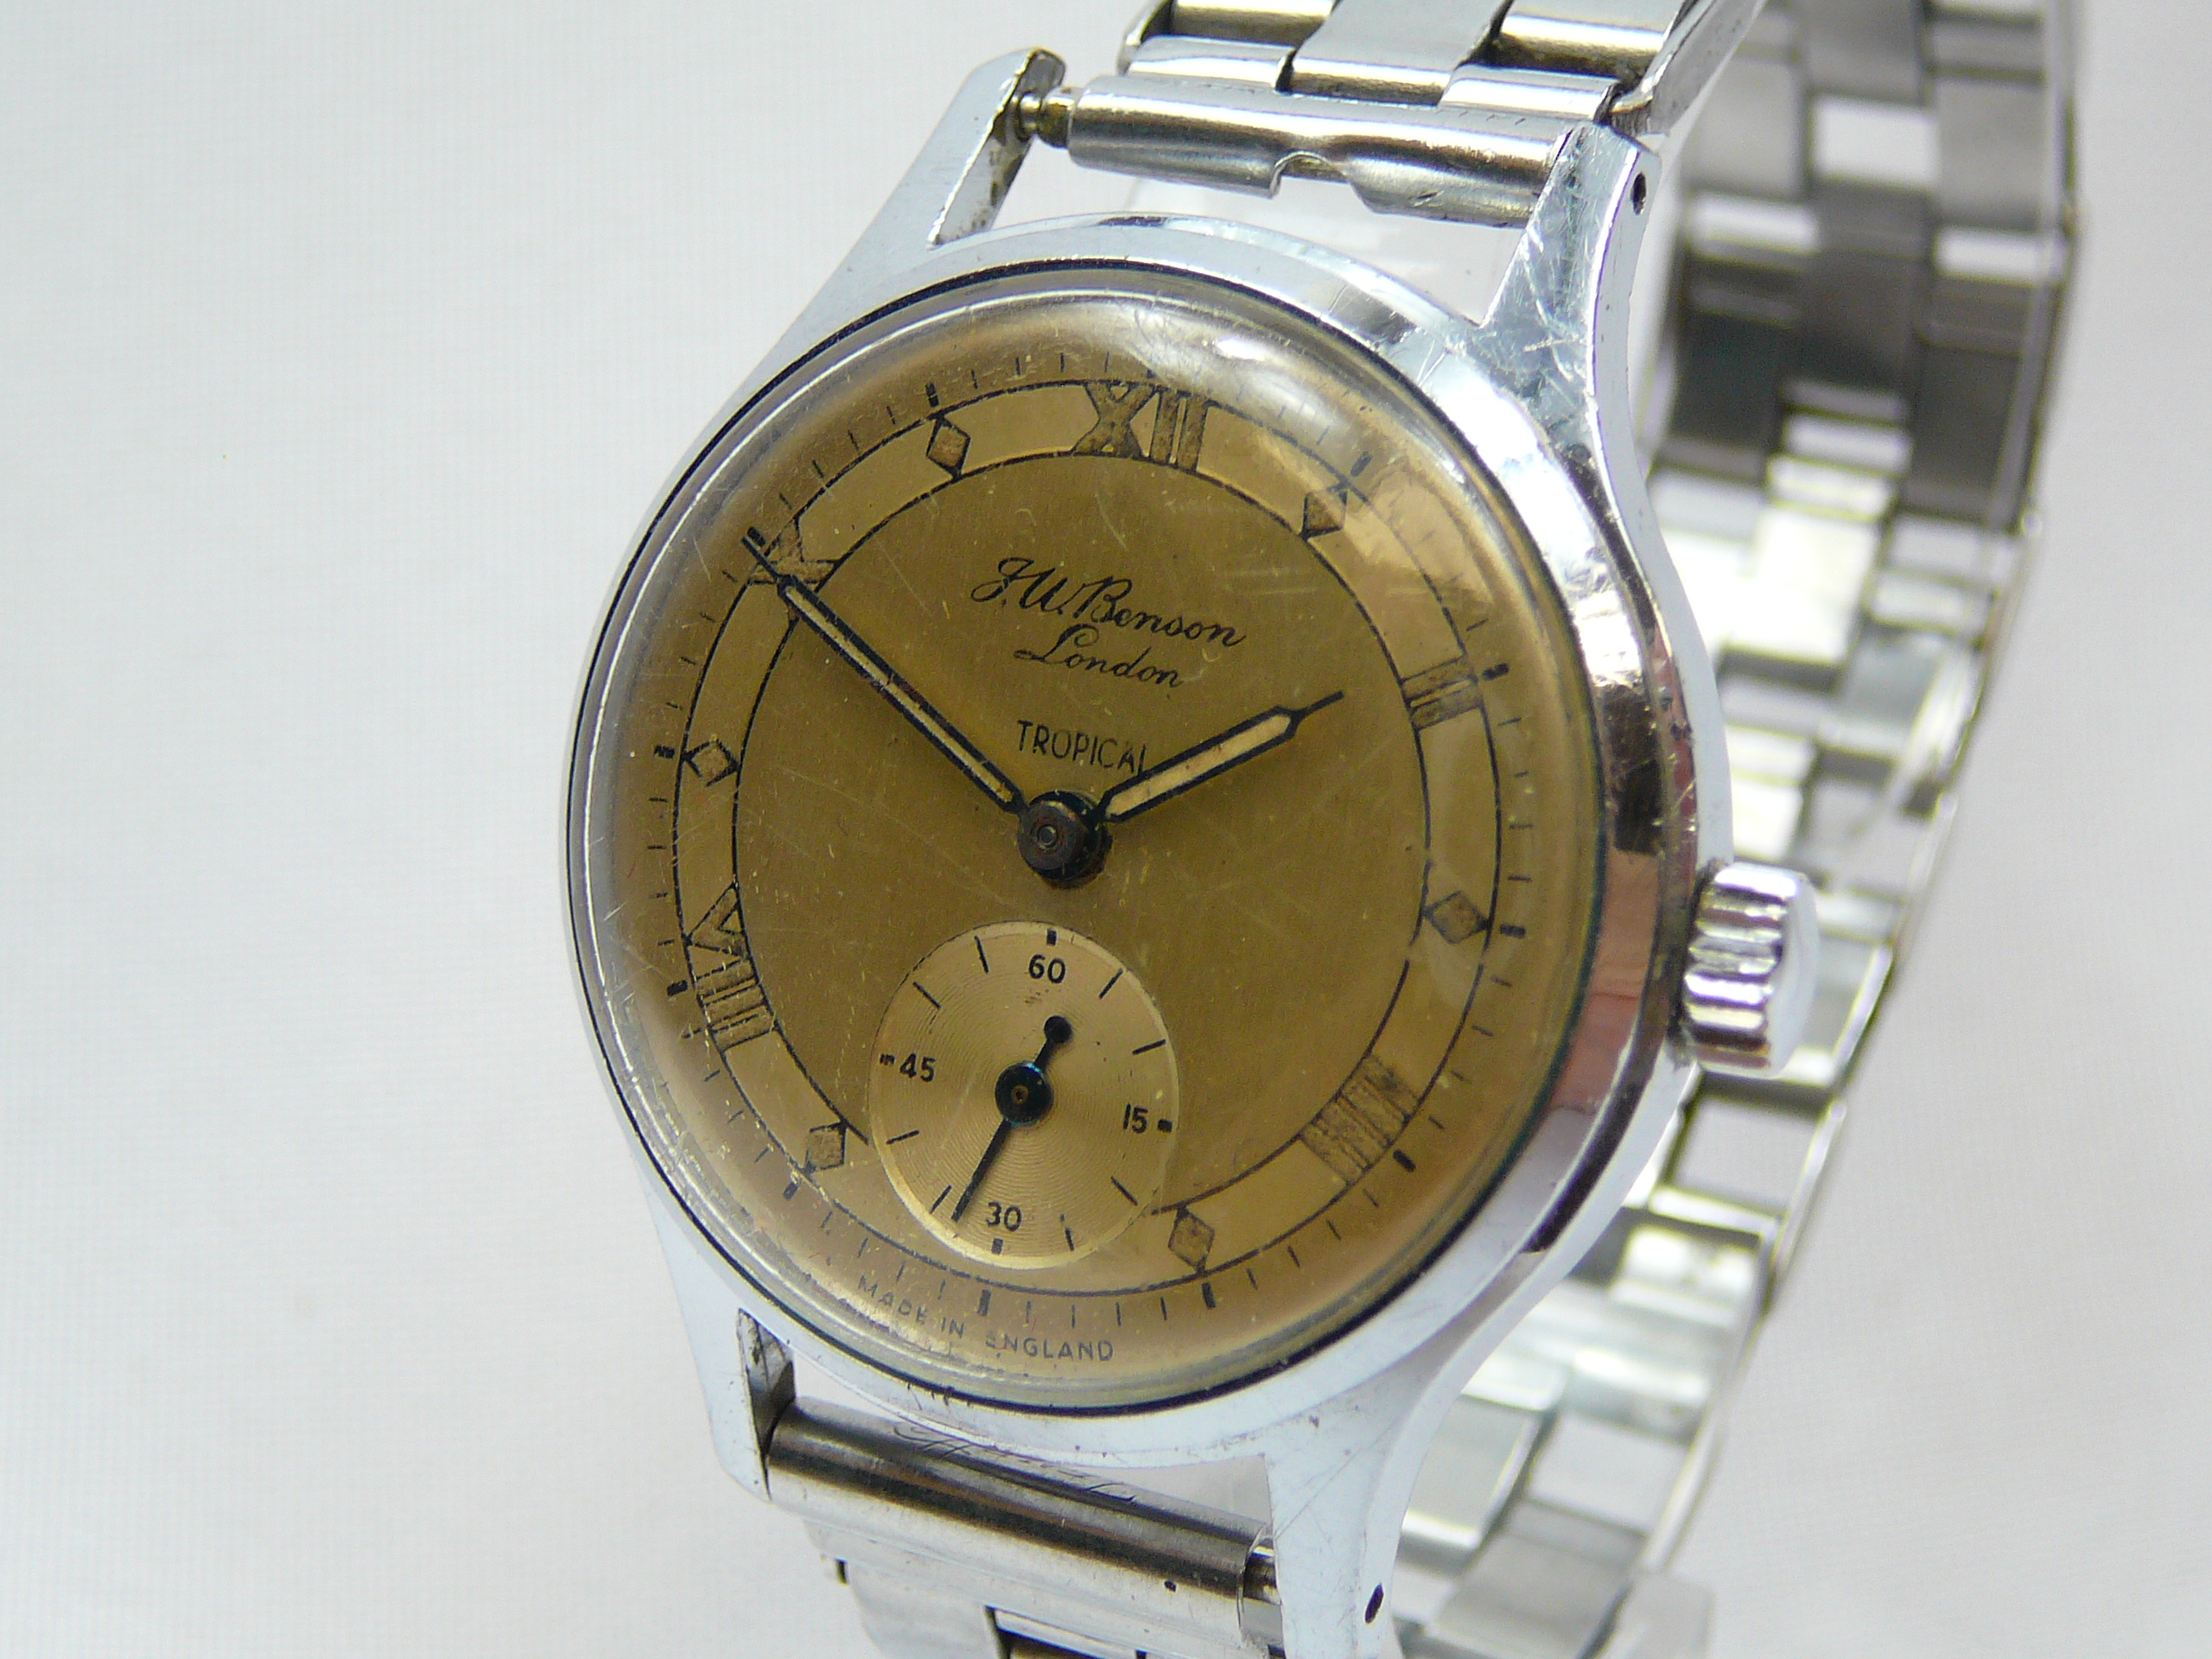 Gents vintage JW Benson wristwatch